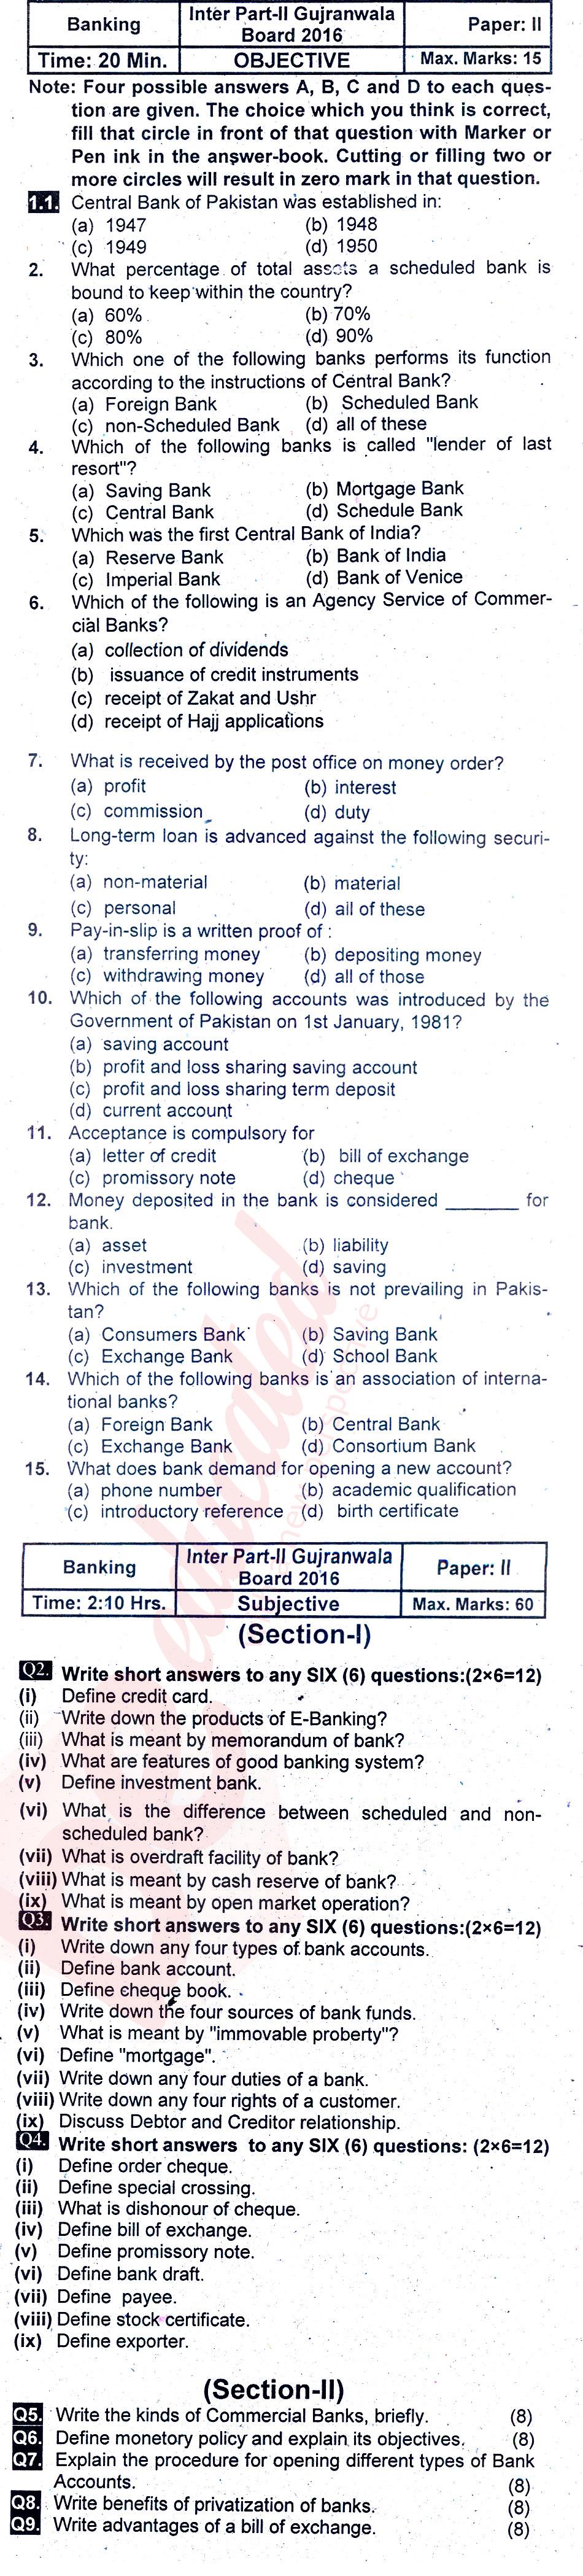 Principles of Banking ICOM Part 2 Past Paper Group 1 BISE Gujranwala 2016